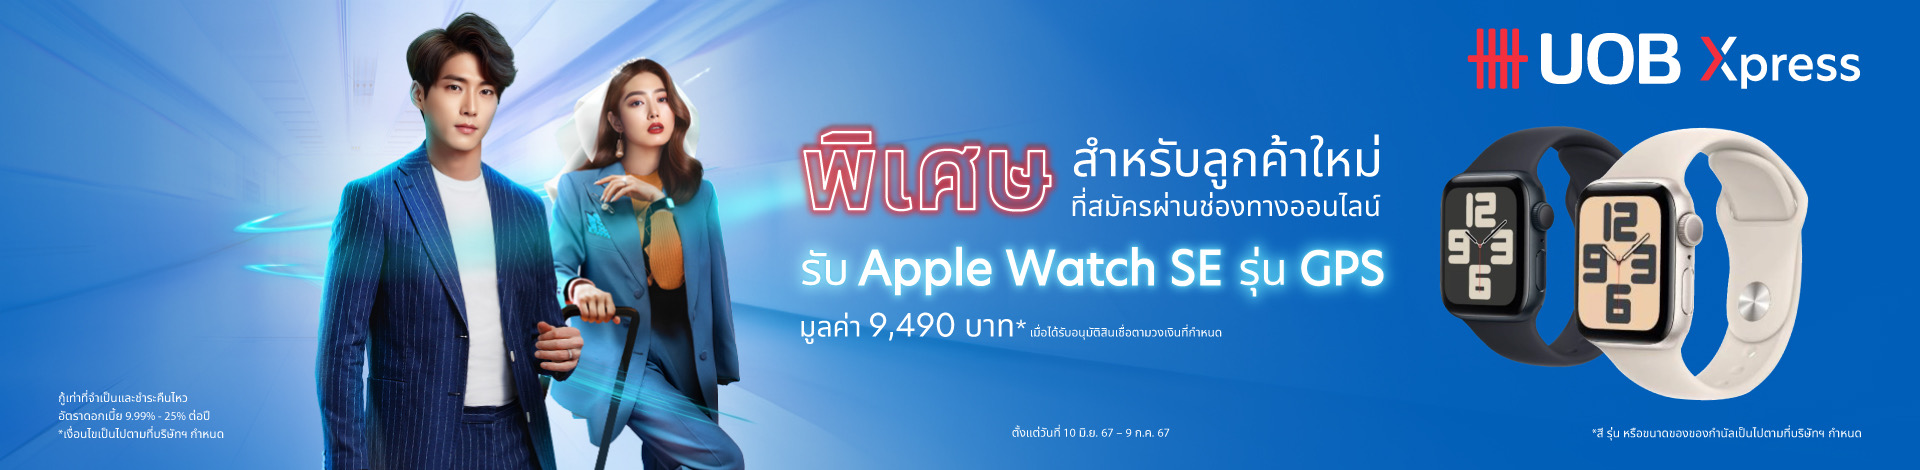 UOB XPress - Apple Watch SE